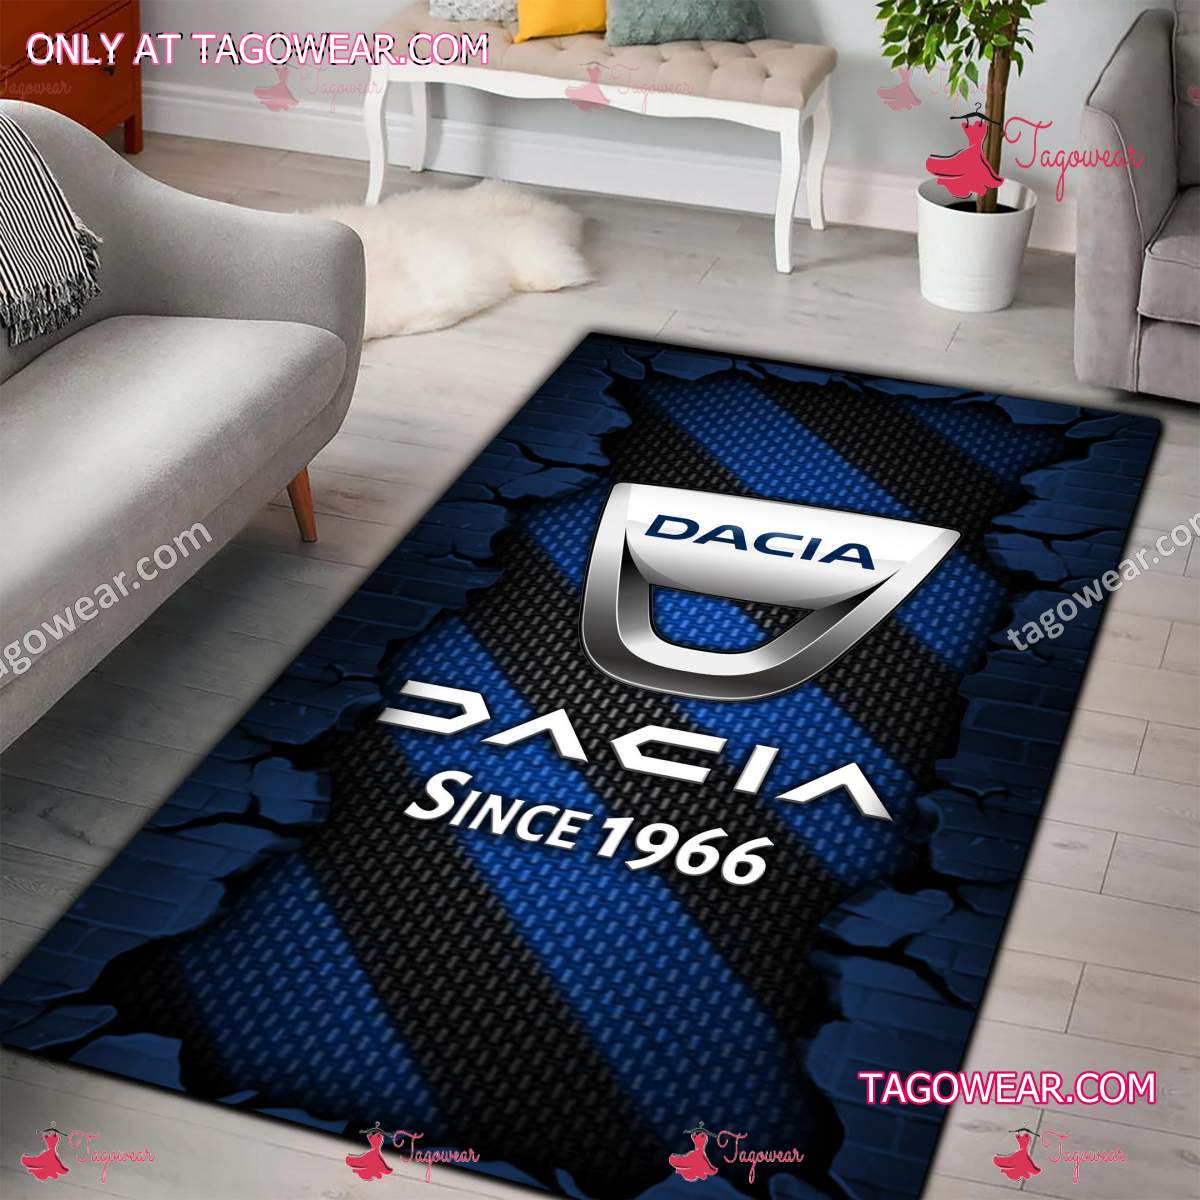 Dacia Since 1966 Rug Carpet